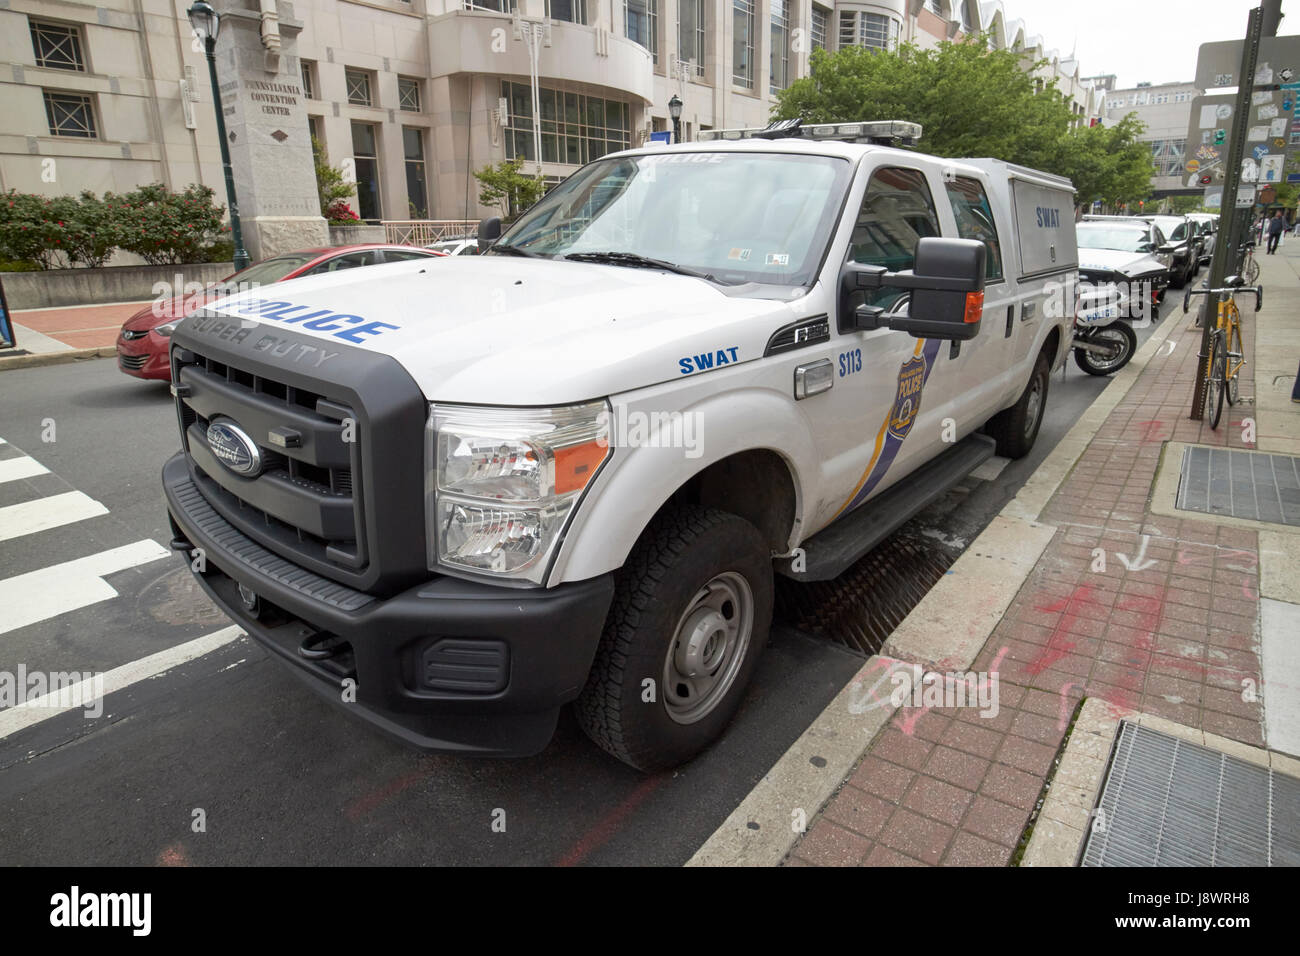 Philadelphia police swat ford truck vehicle USA Stock Photo